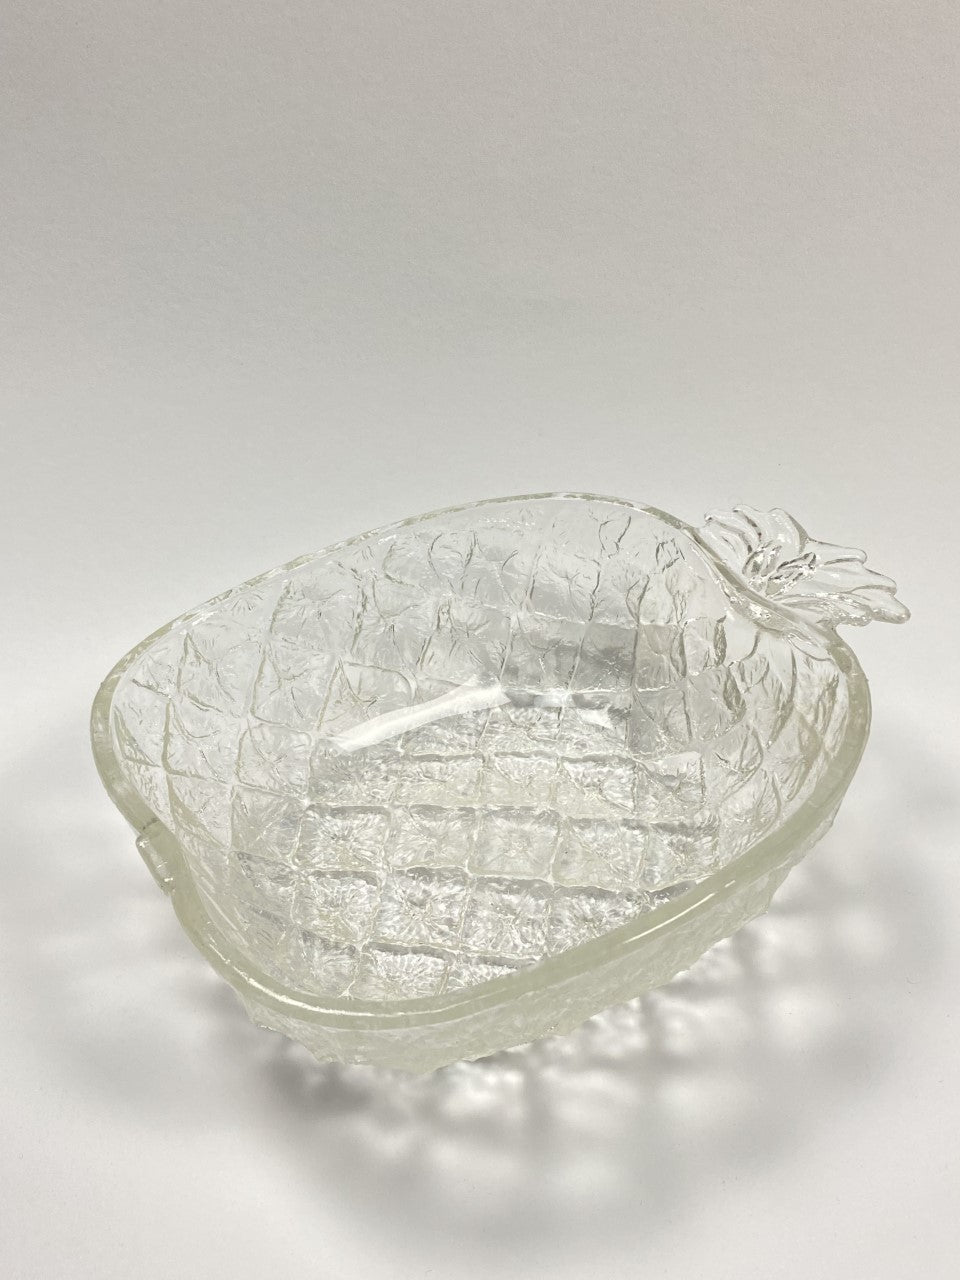 Glass pineapple-shaped bowl